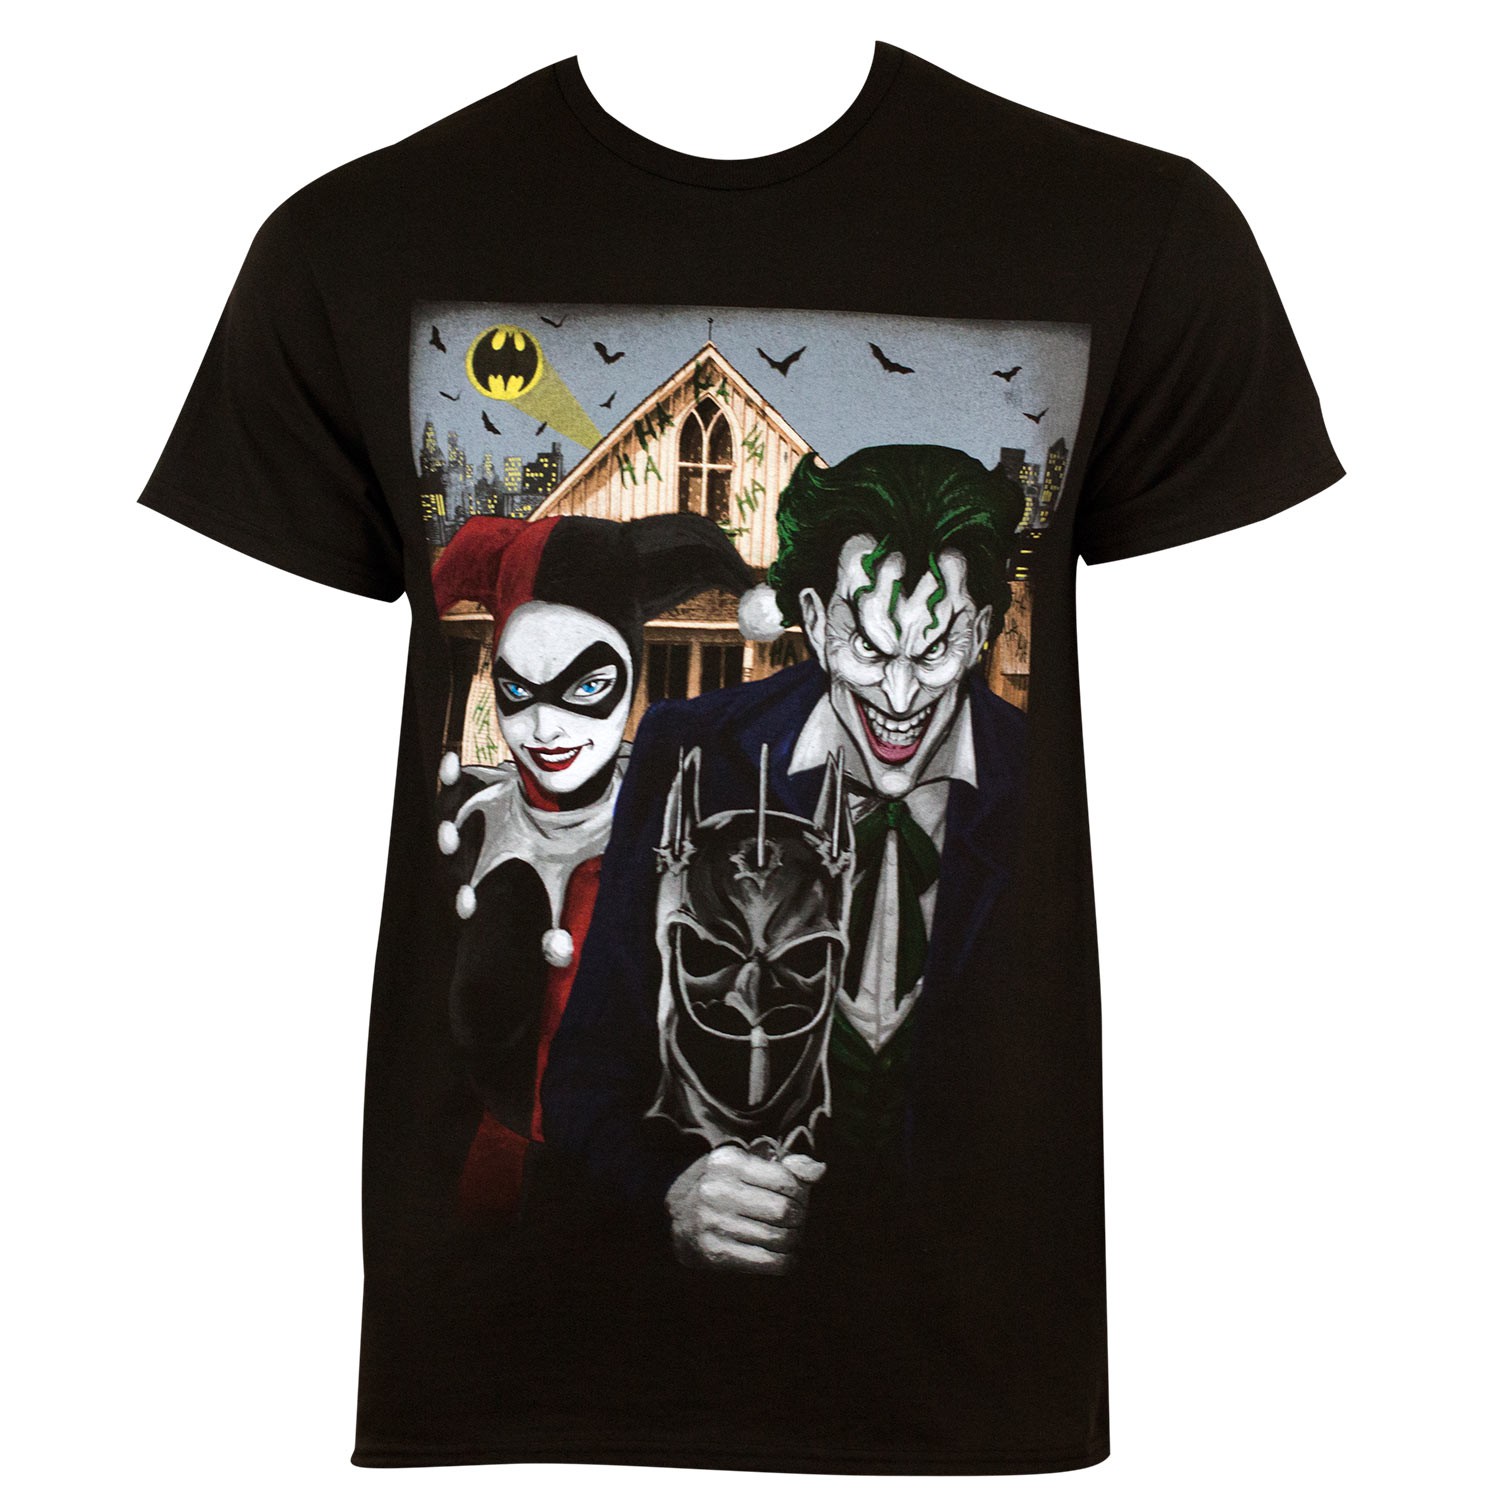 Harley Quinn The Joker American Gothic Tee Shirt